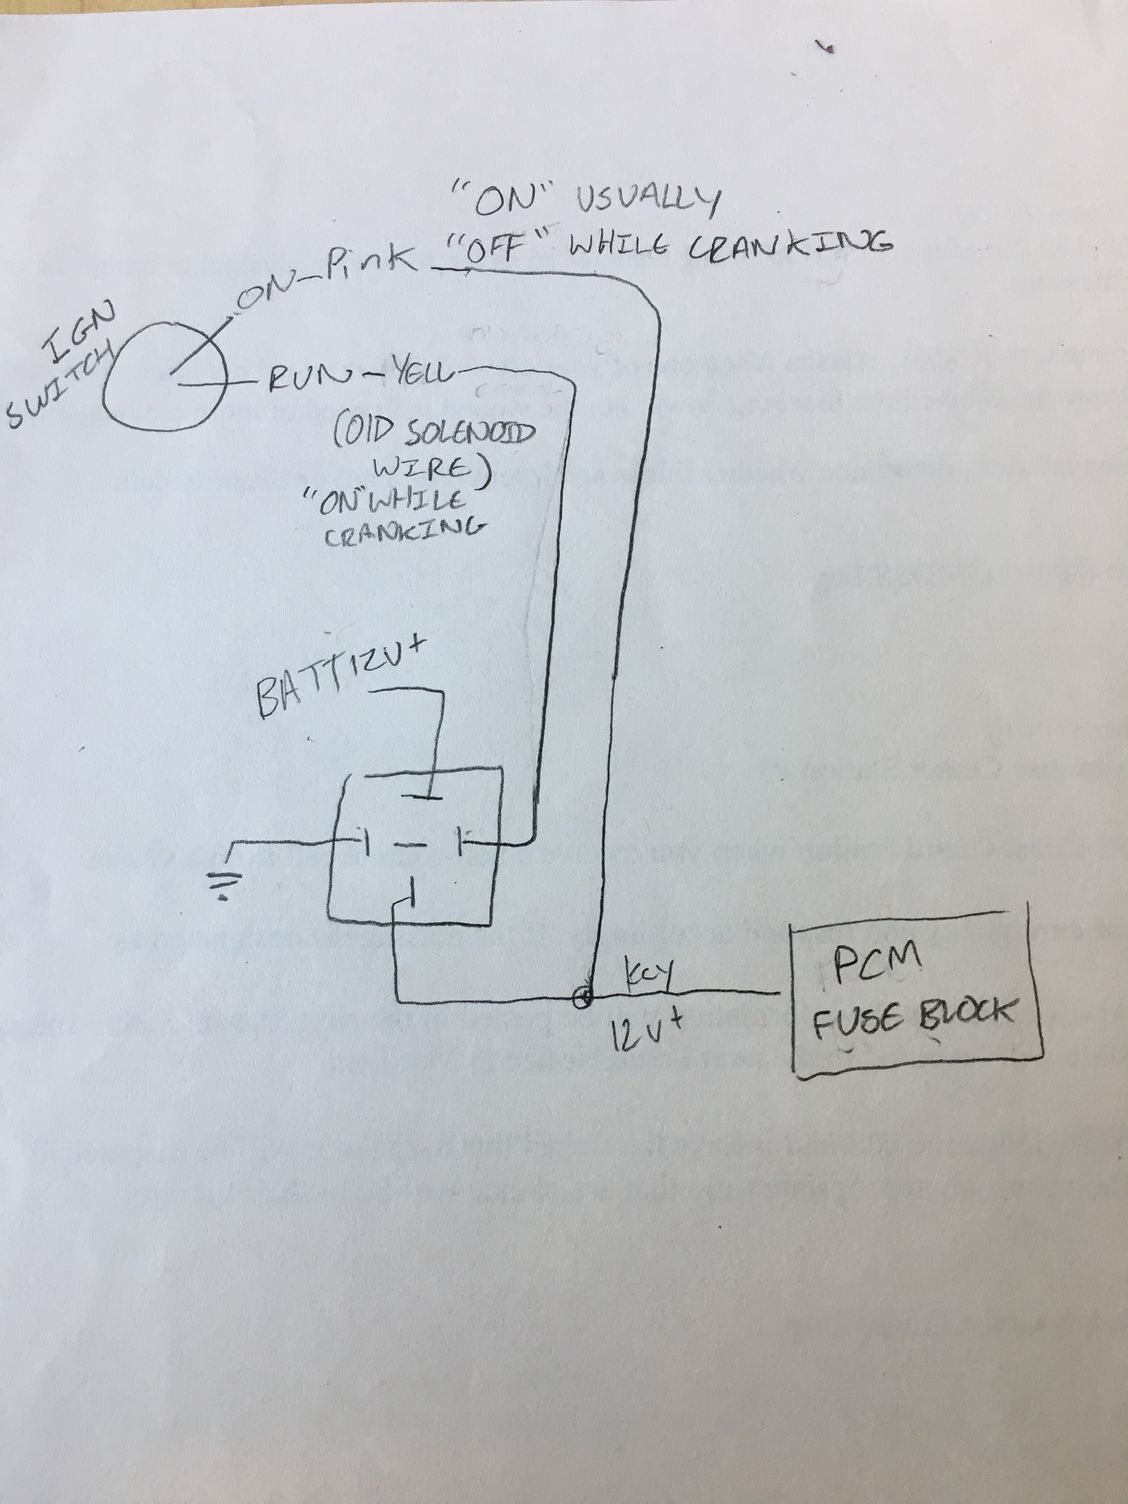 35 Ls Swap Fuse Block Diagram - Wiring Diagram Online Source